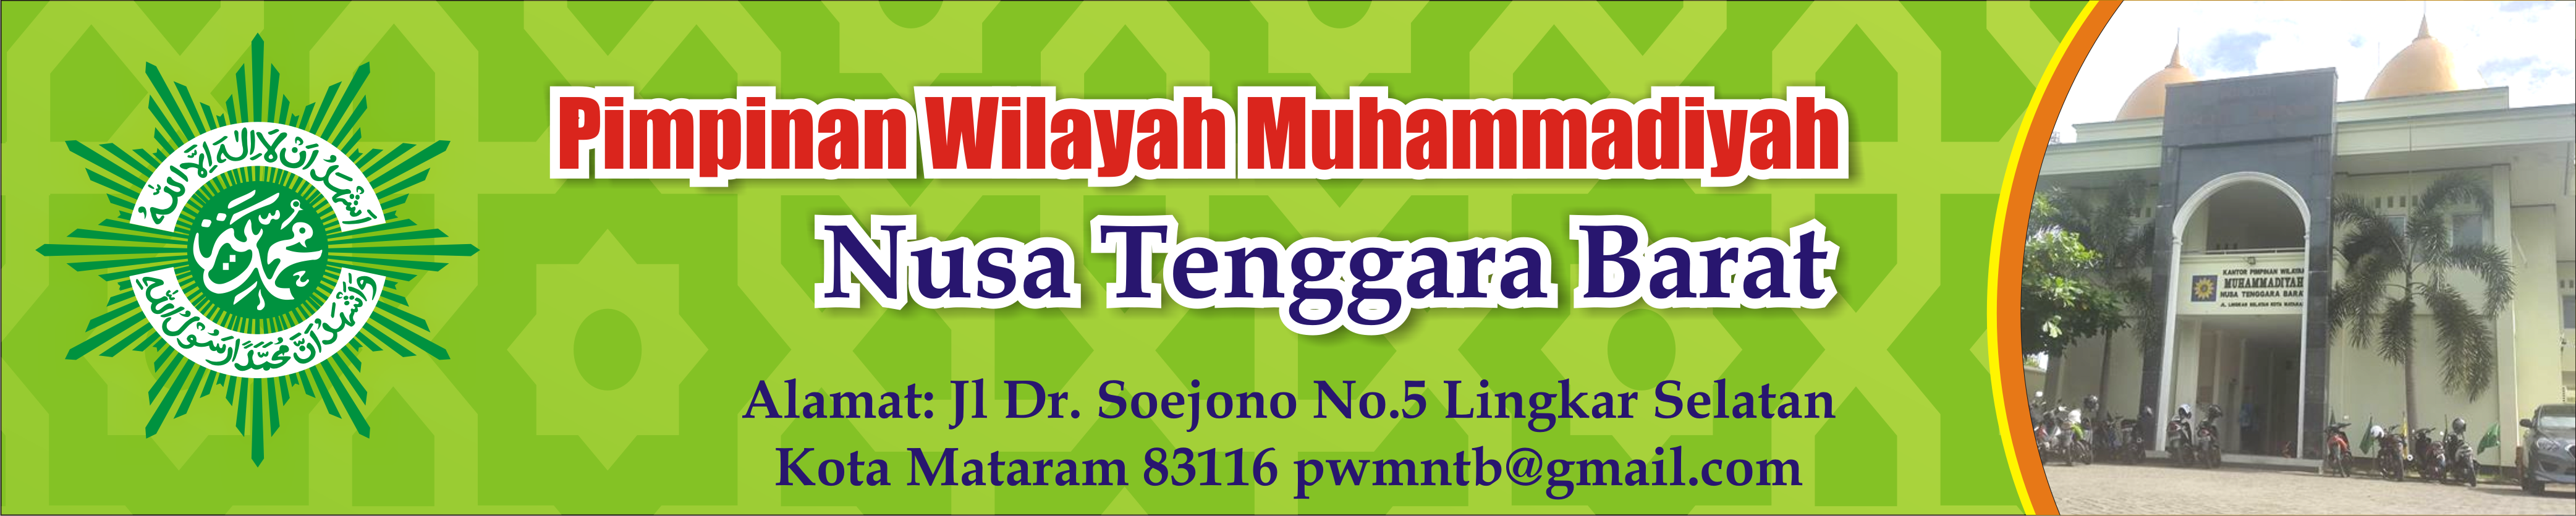 Majelis Tarjih dan Tajdid Pimpinan Wilayah Muhammadiyah Nusa Tenggara Barat